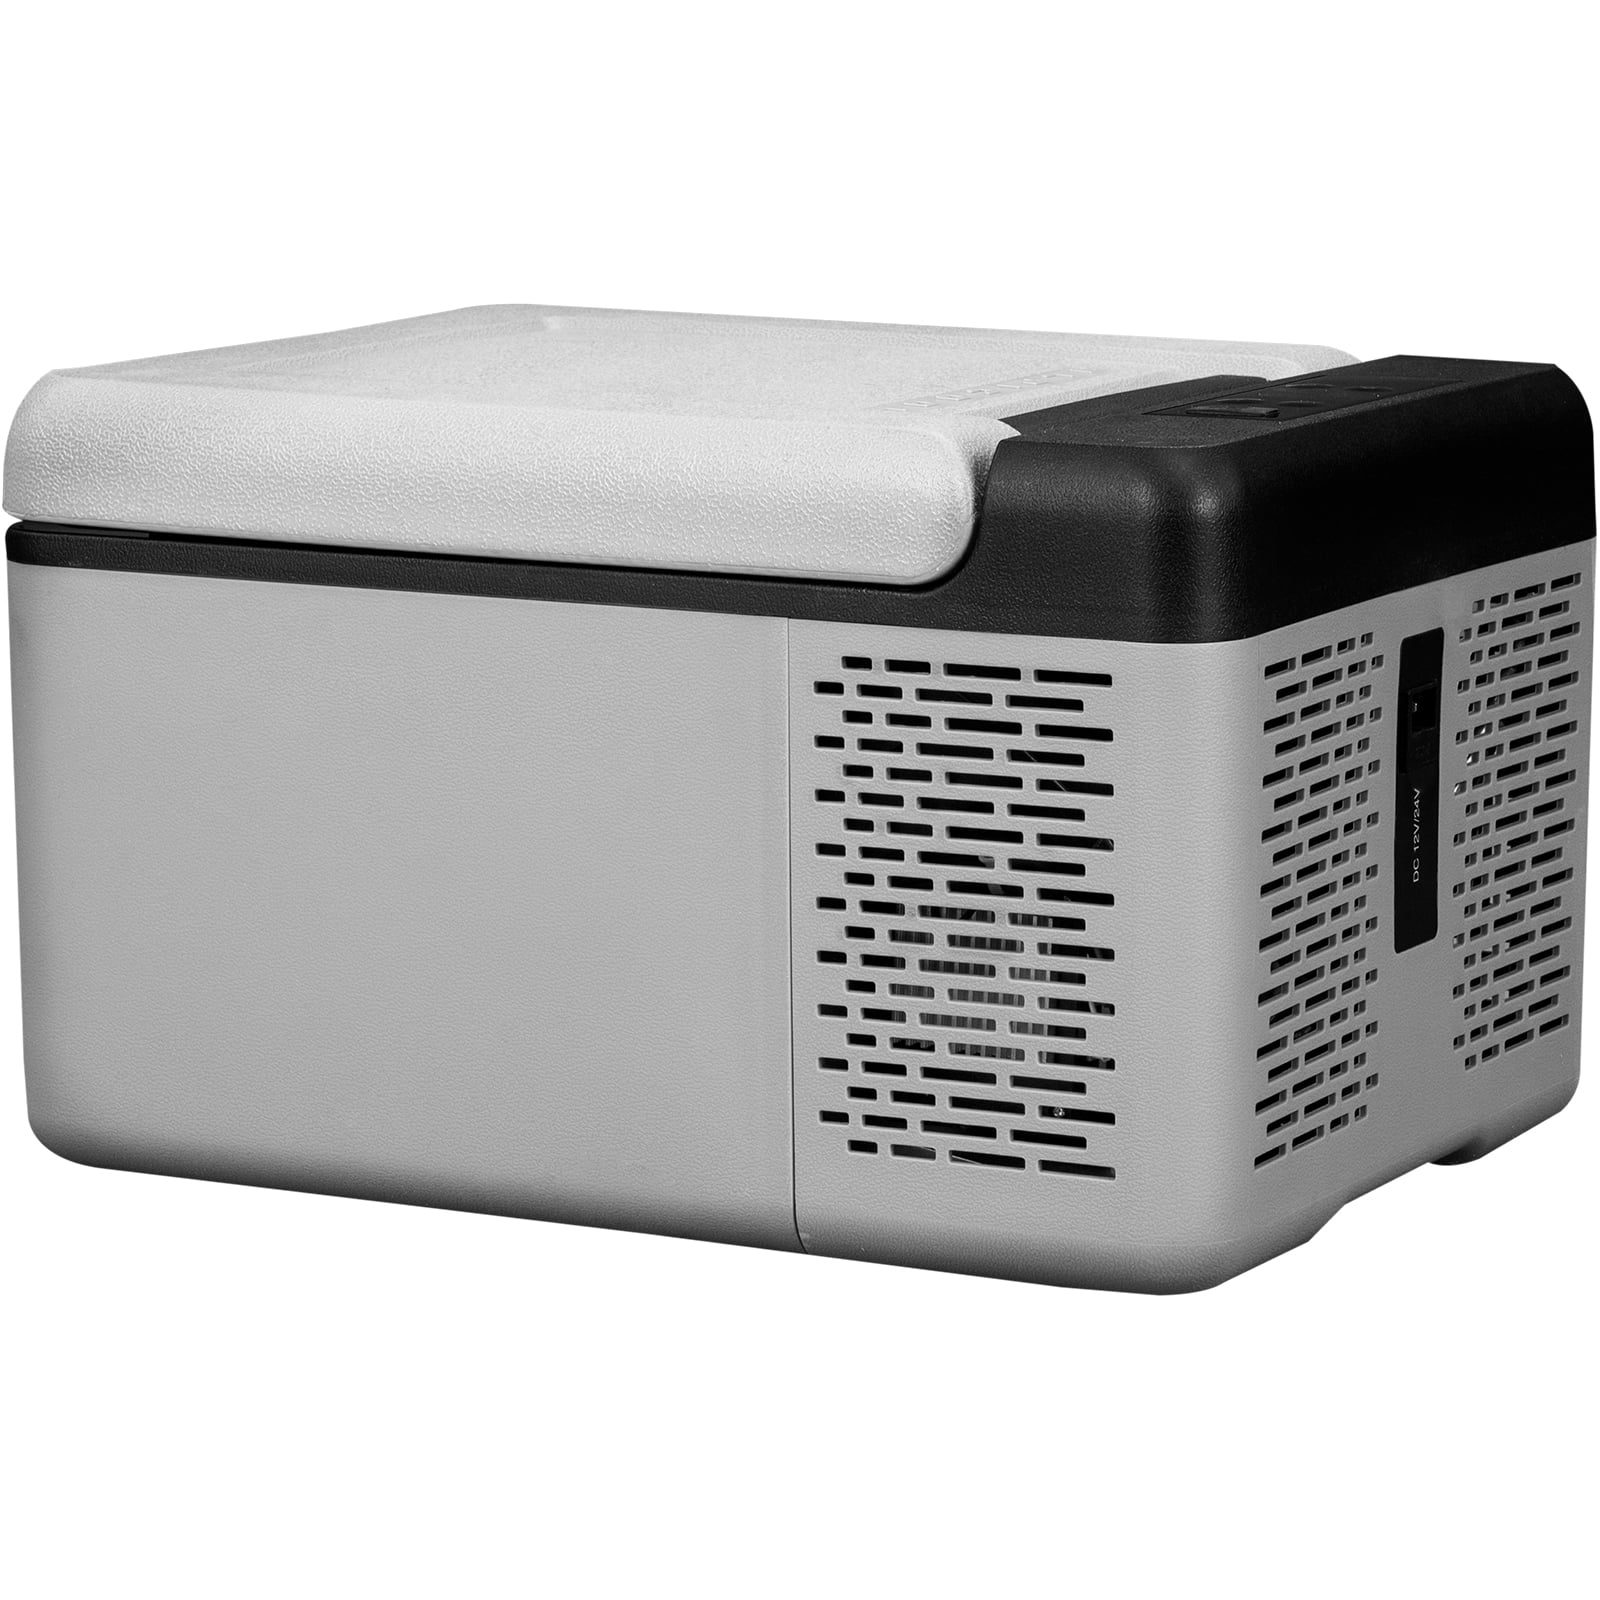 Promounts Dual Zone Refrigerator with Freezer 55Liter, Portable Fridge for Camping 12-24V DC Car, 110-220V